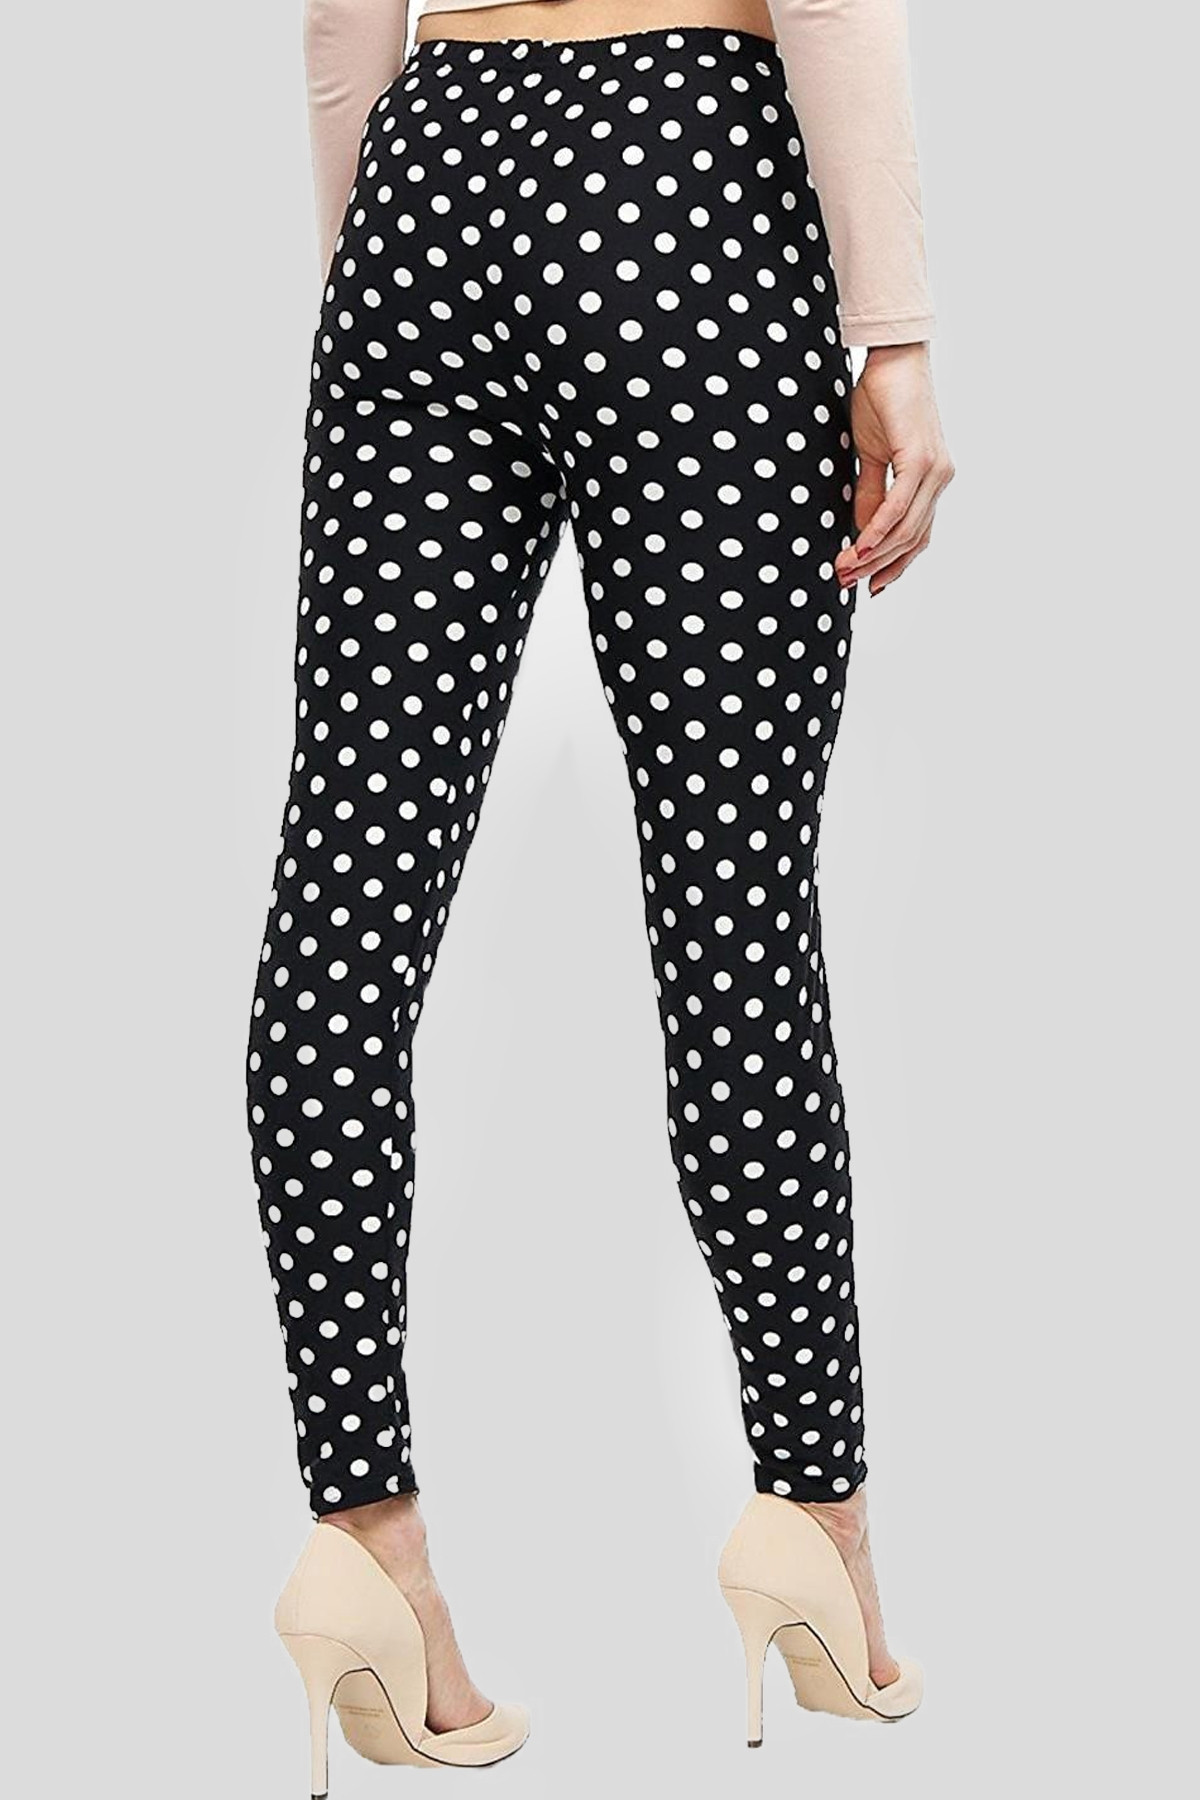 Beth Plus Size Black Polka Dot Print Leggings 16-26